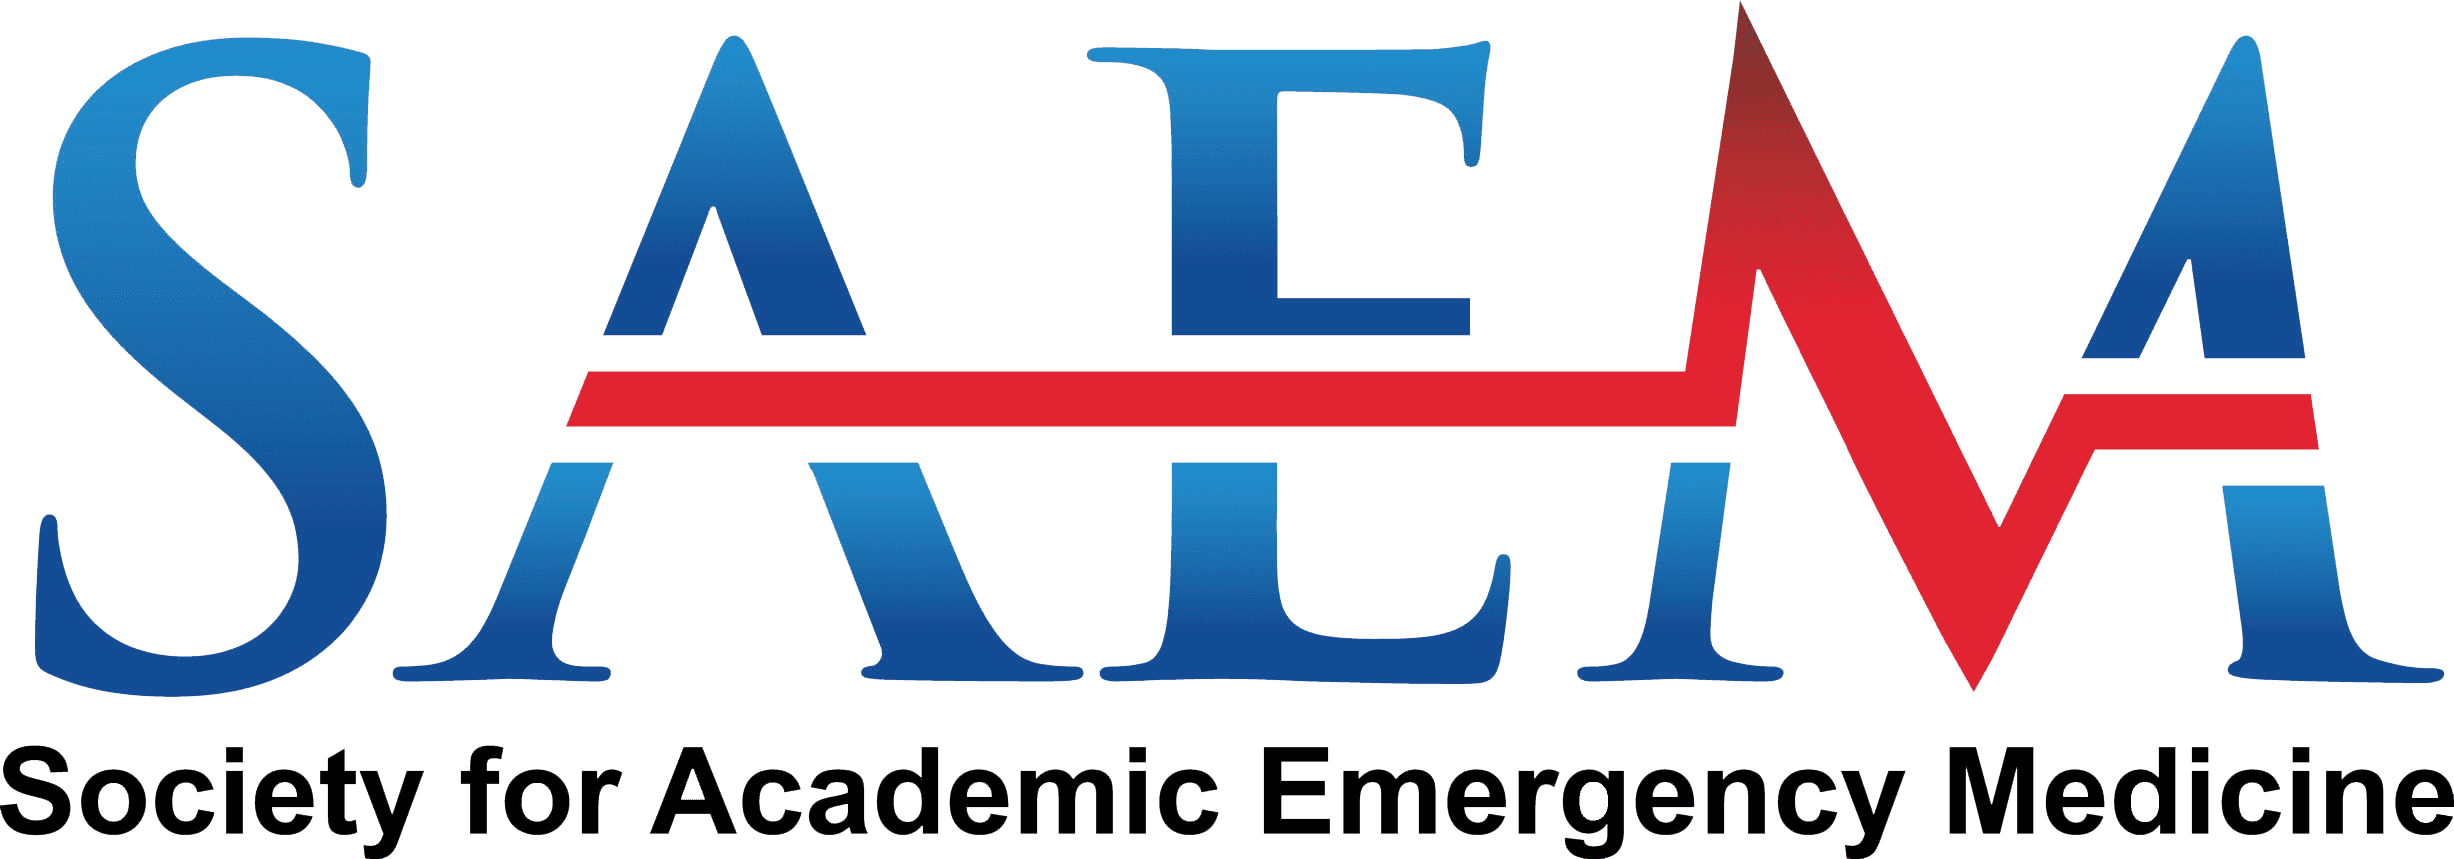 Society for Academic Emergency Medicine logo